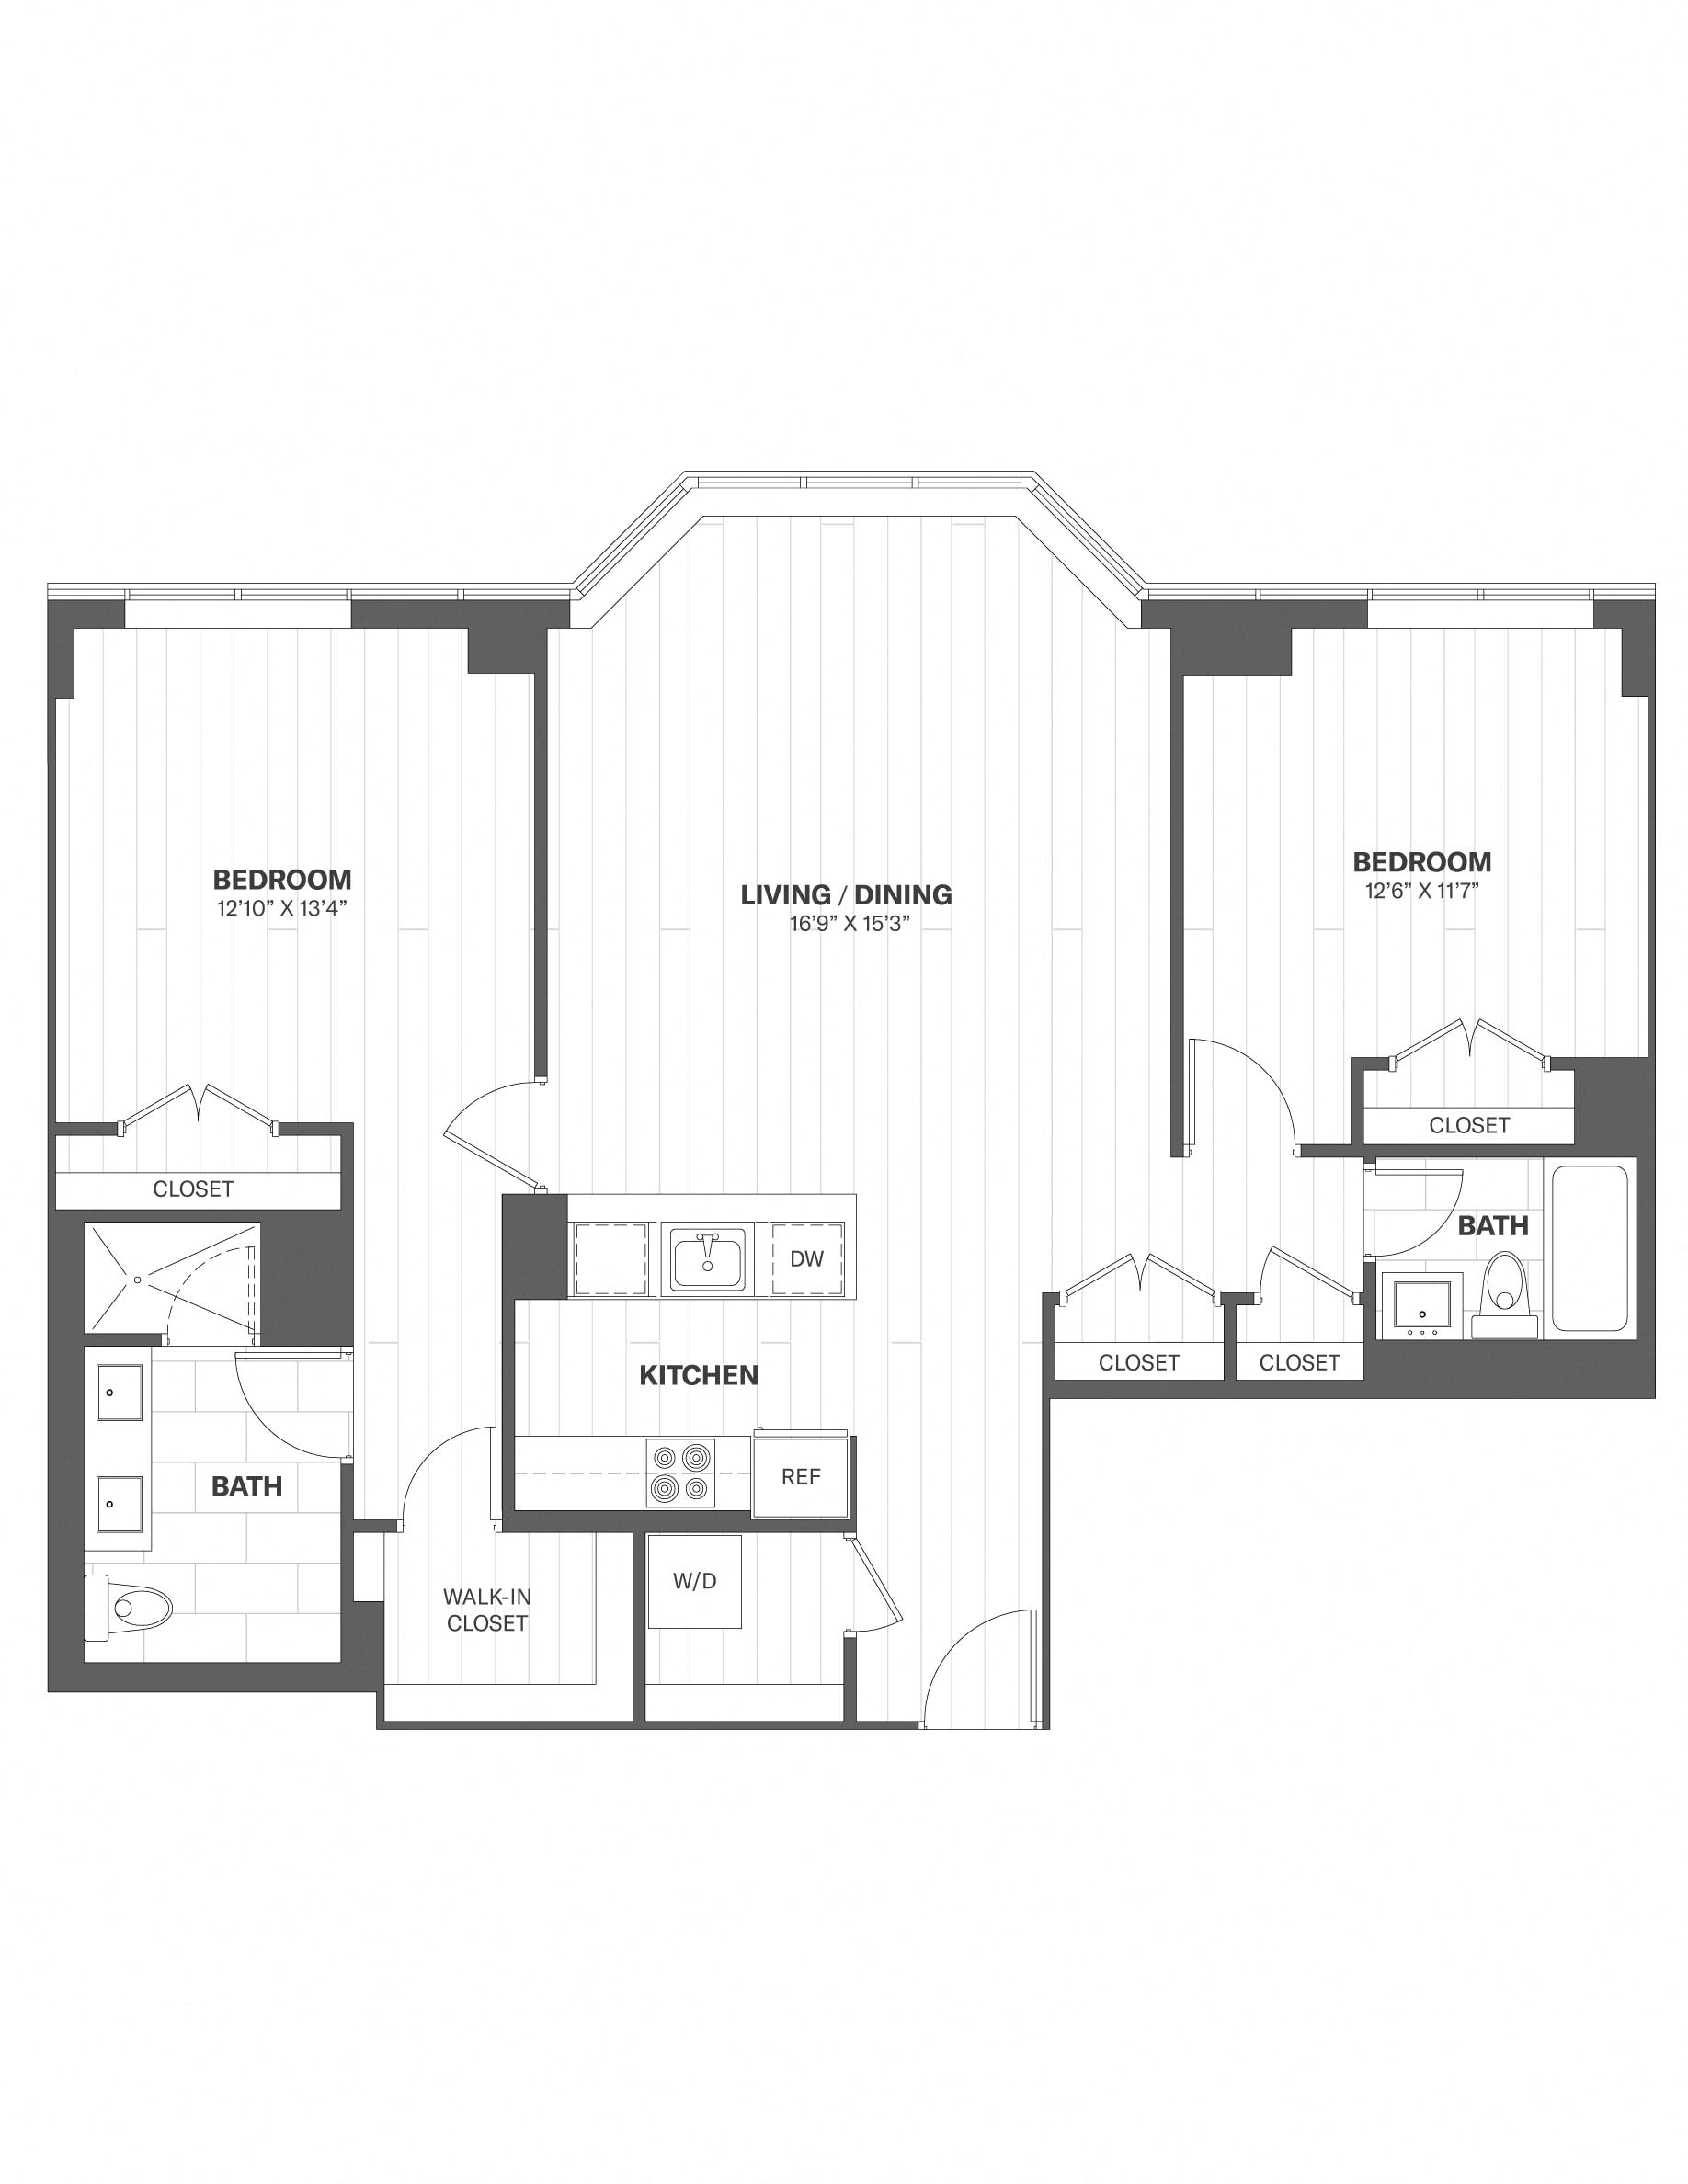 Apartment 3501 floorplan